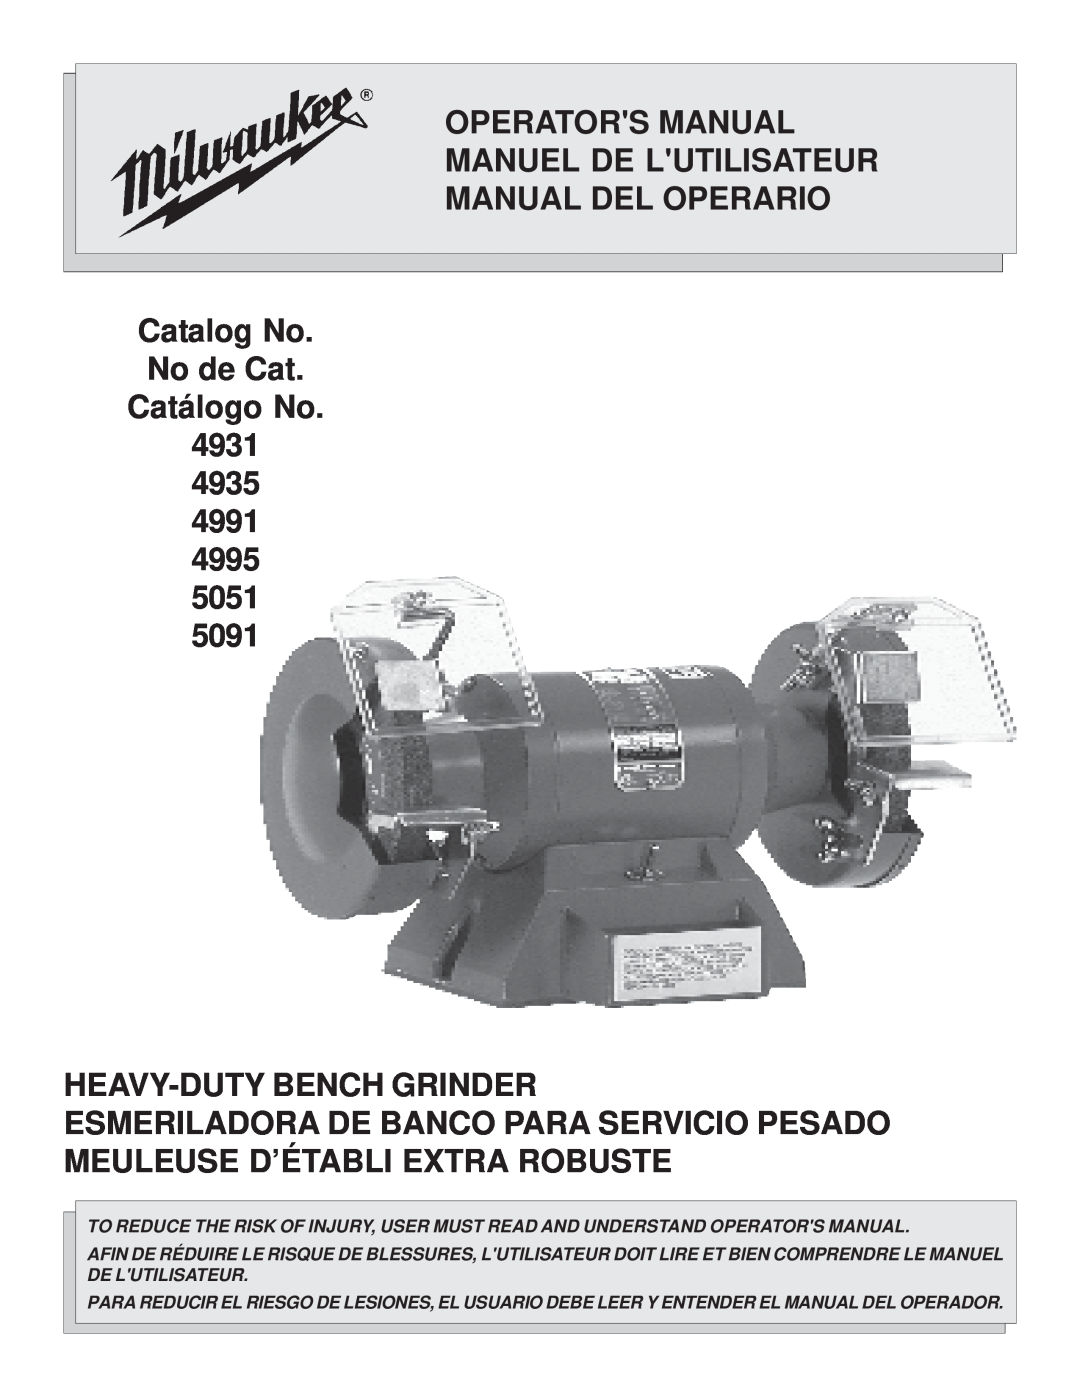 Milwaukee 5091, 5051, 4995, 4991, 4935, 4931 manual Operators Manual Manuel De Lutilisateur Manual Del Operario 